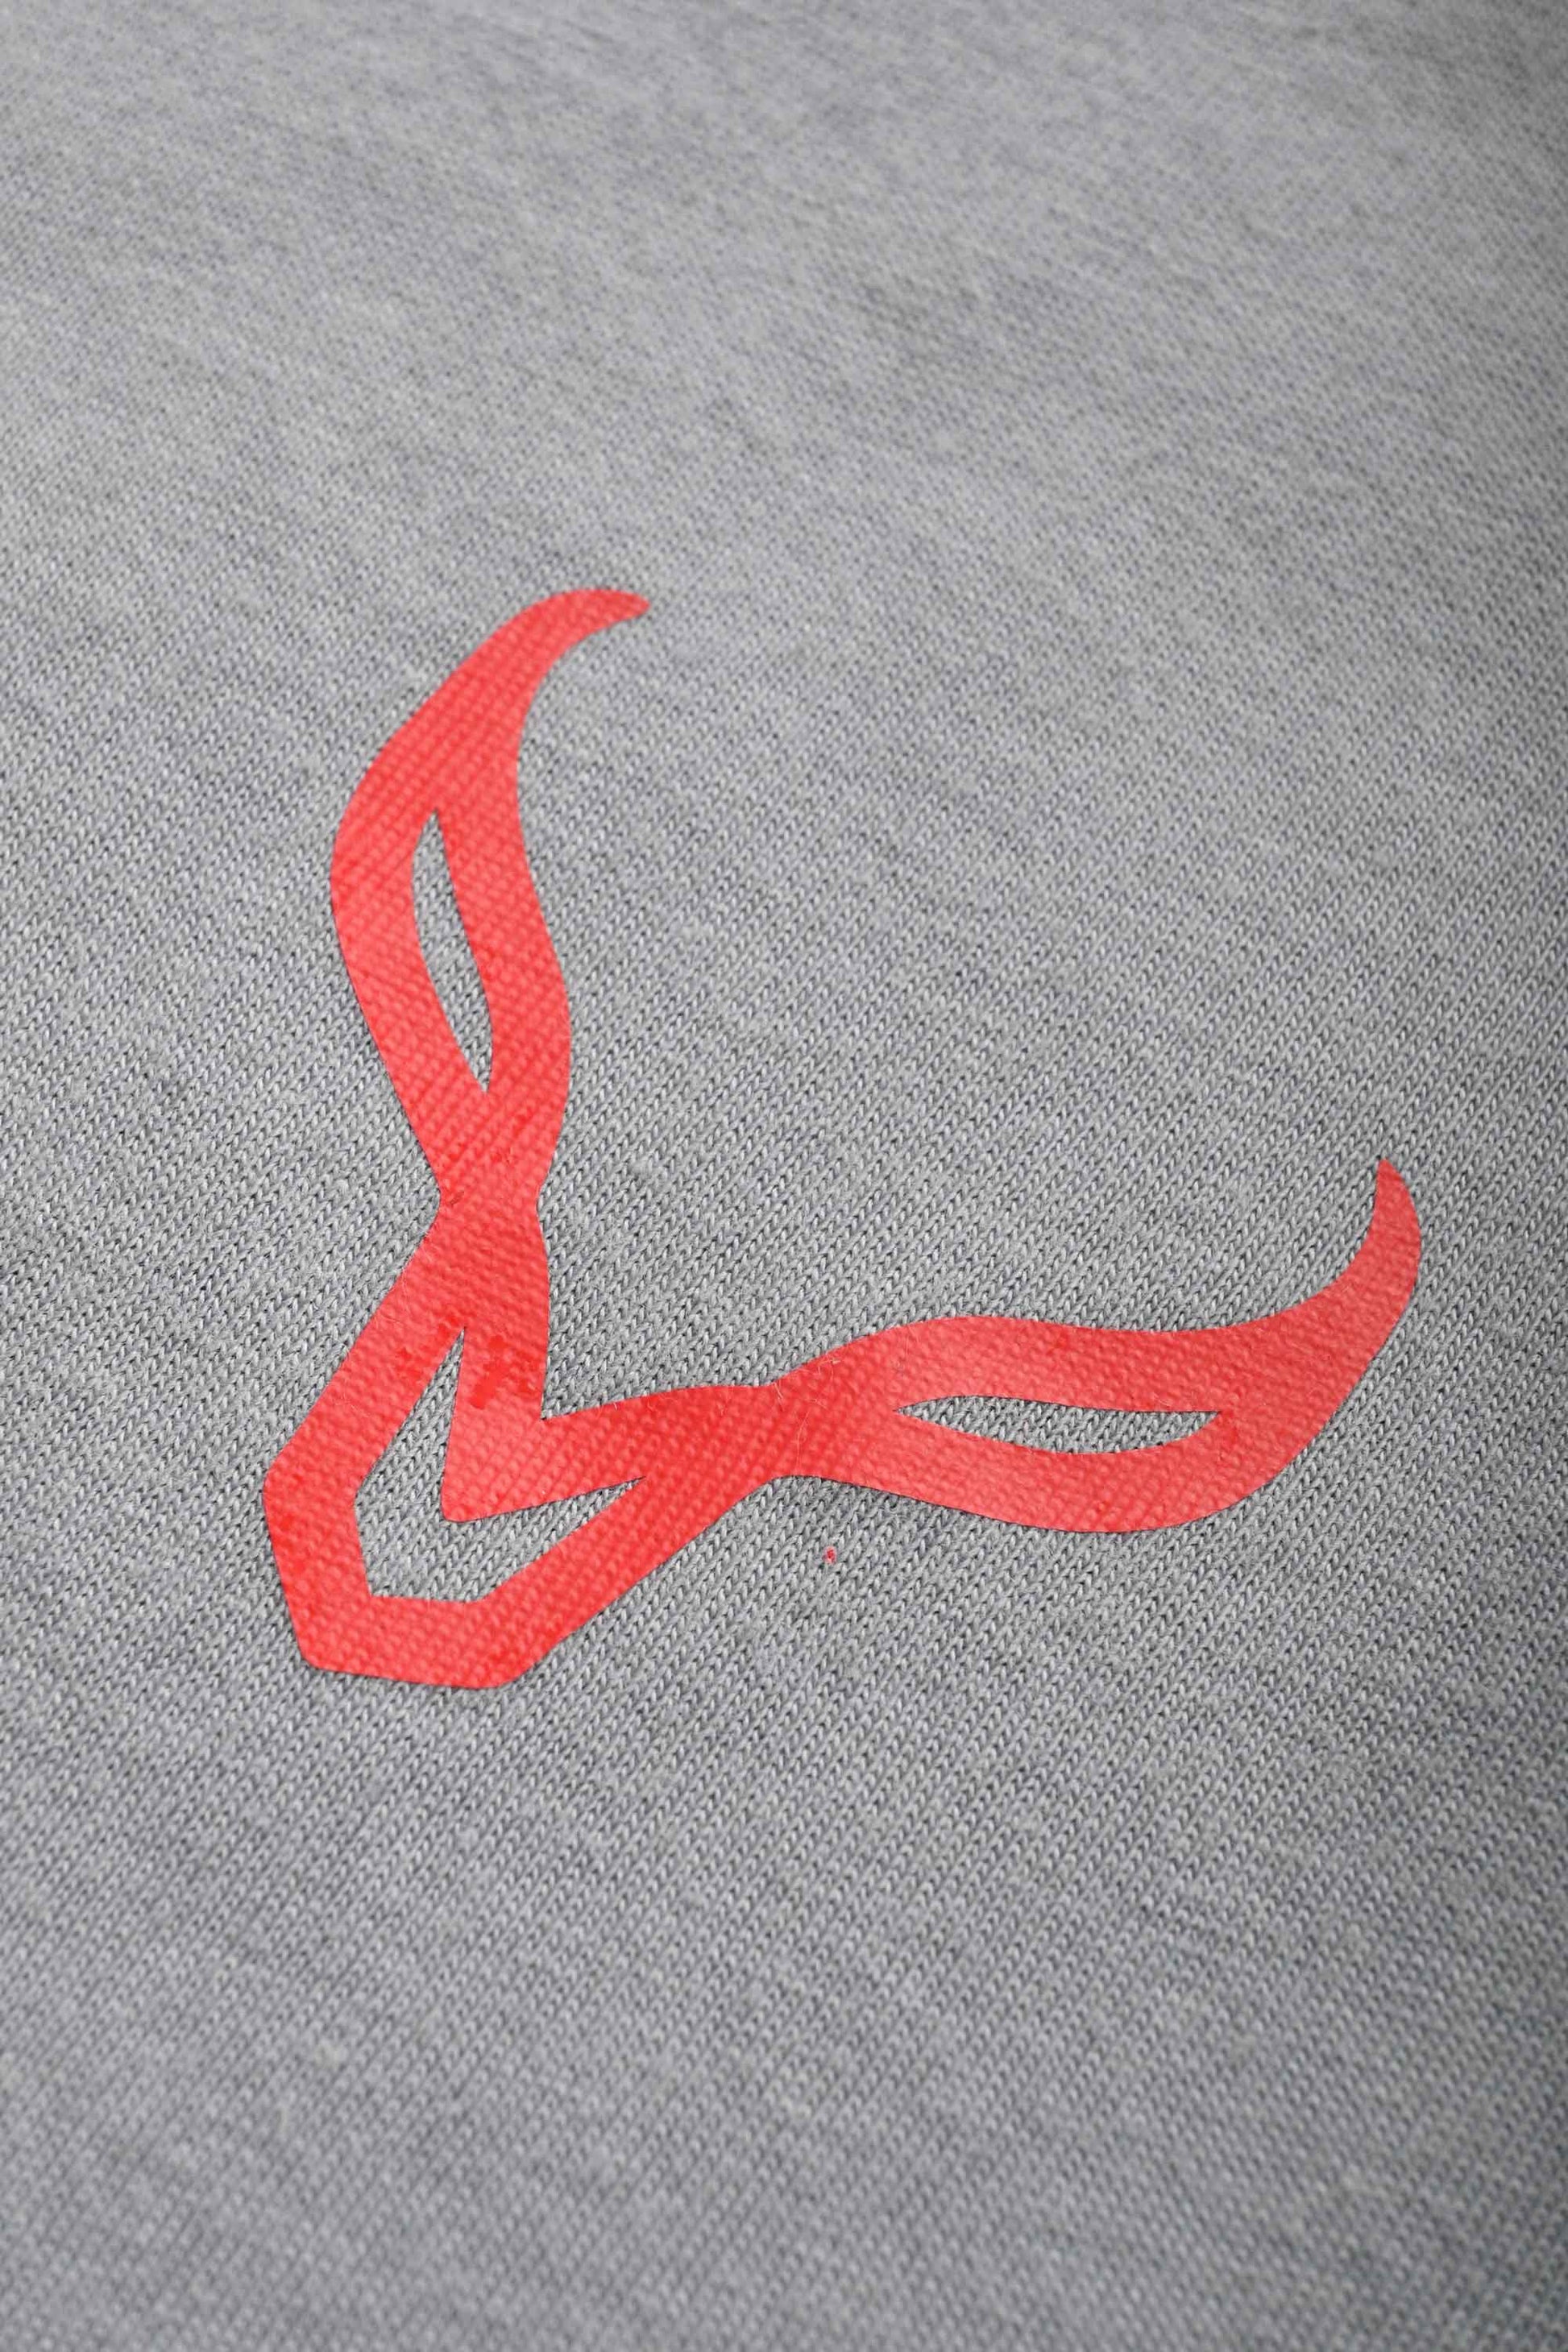 Polo Athletica Women's V-Neck Reflective Stripes Printed Short Sleeve Tee Shirt